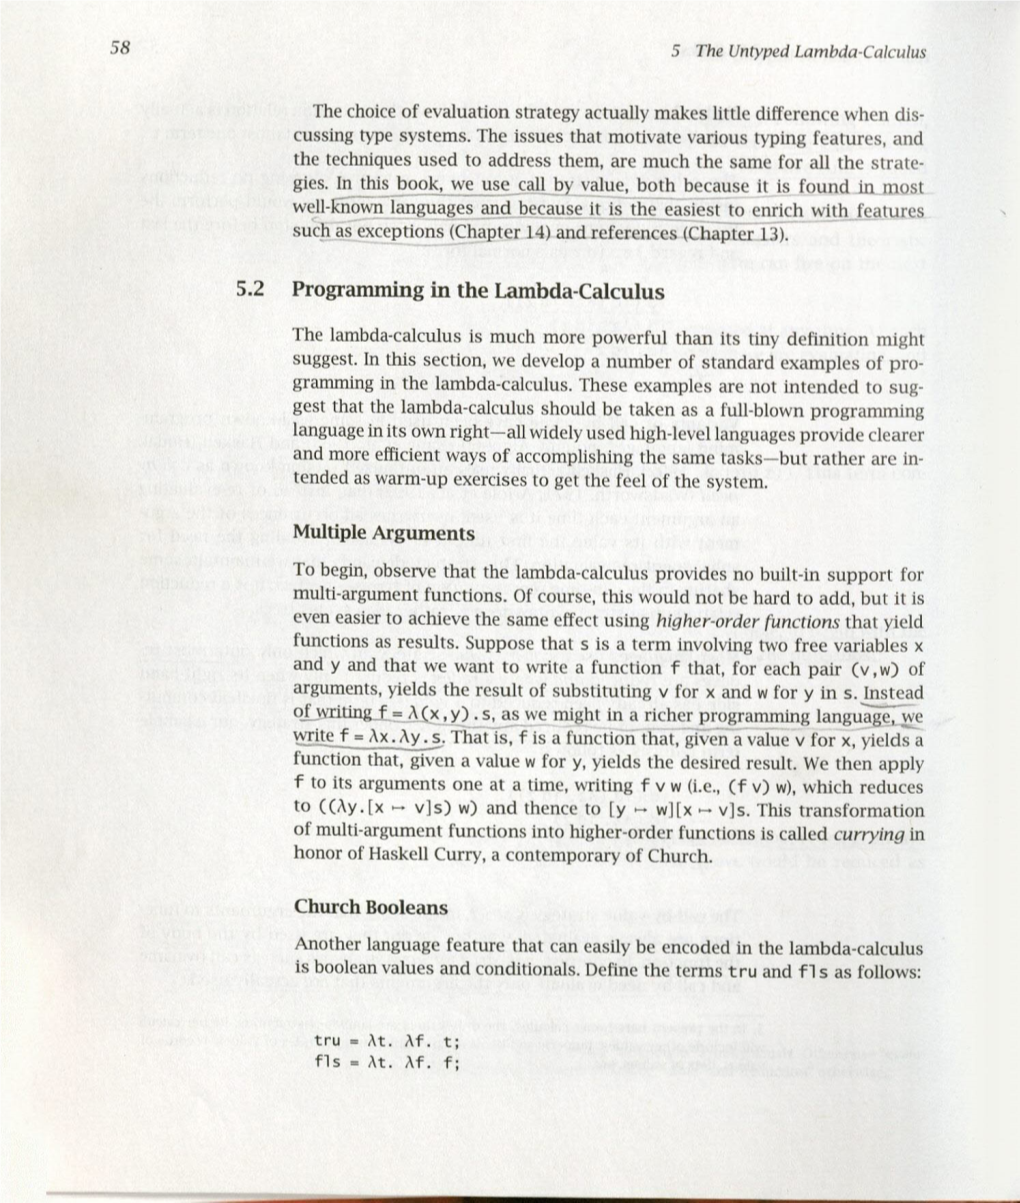 St. 5.2 Programming in the Lambda-Calculus